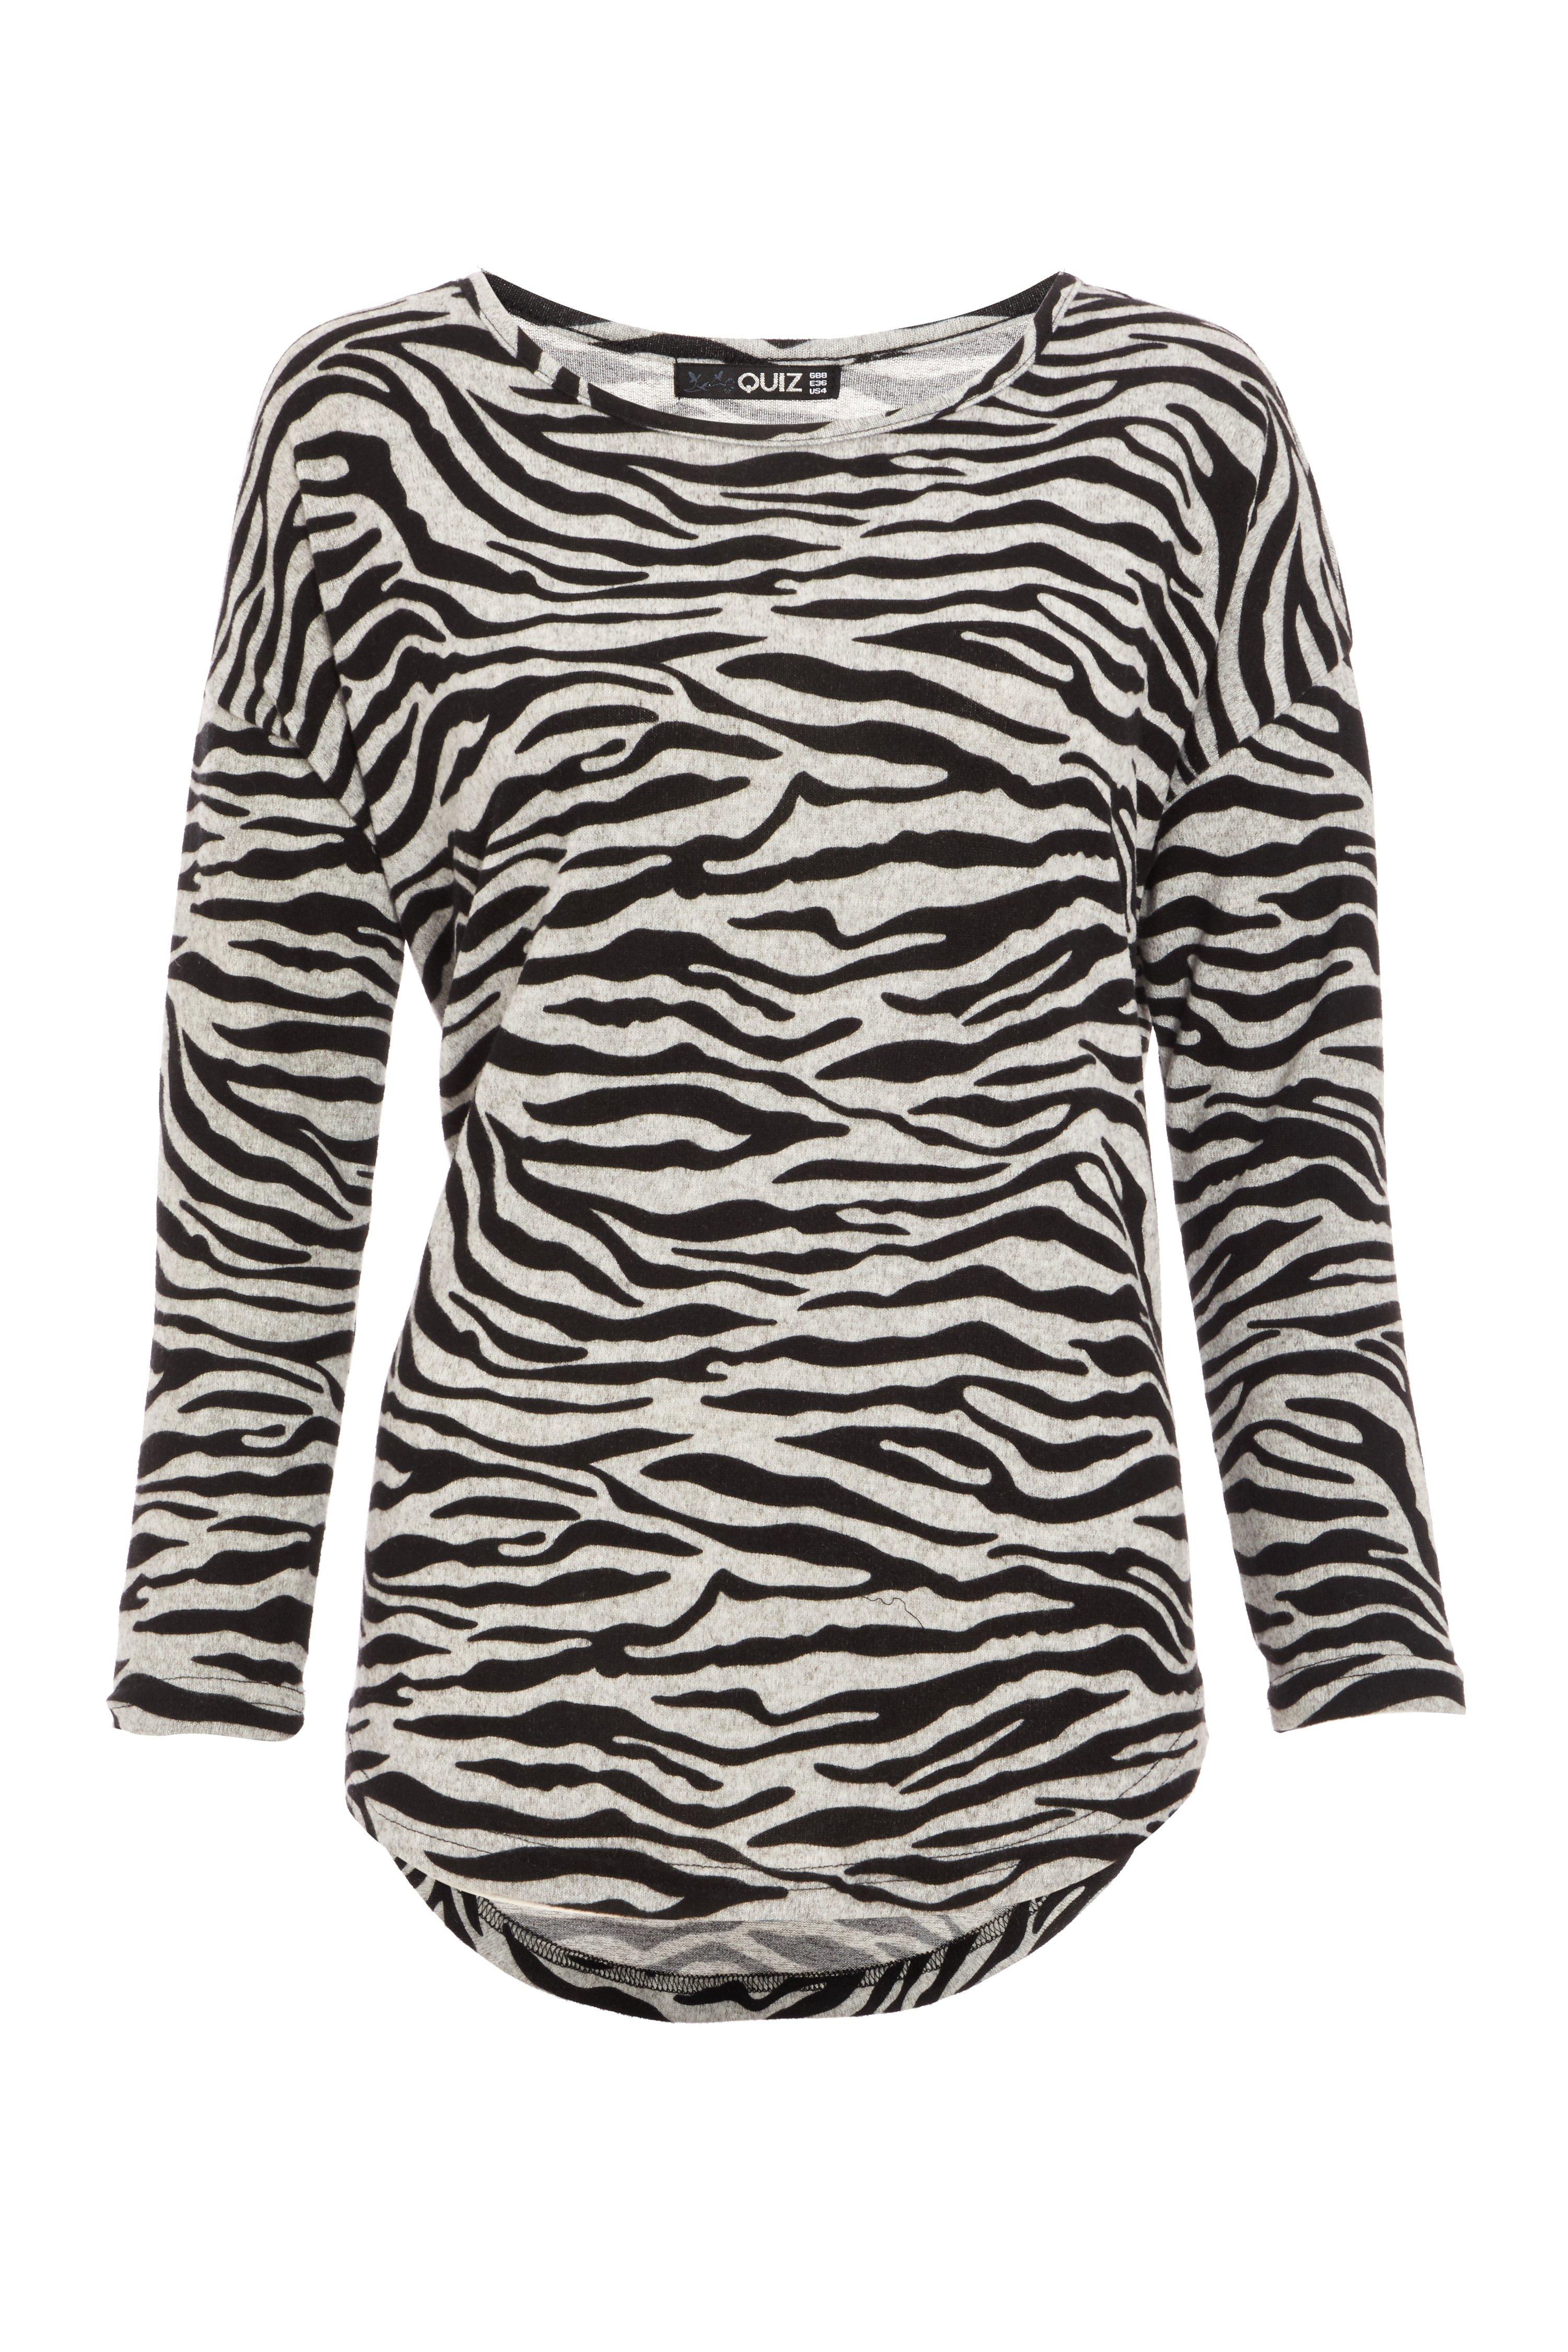 Grey Knitted Zebra Print Top - Quiz Clothing